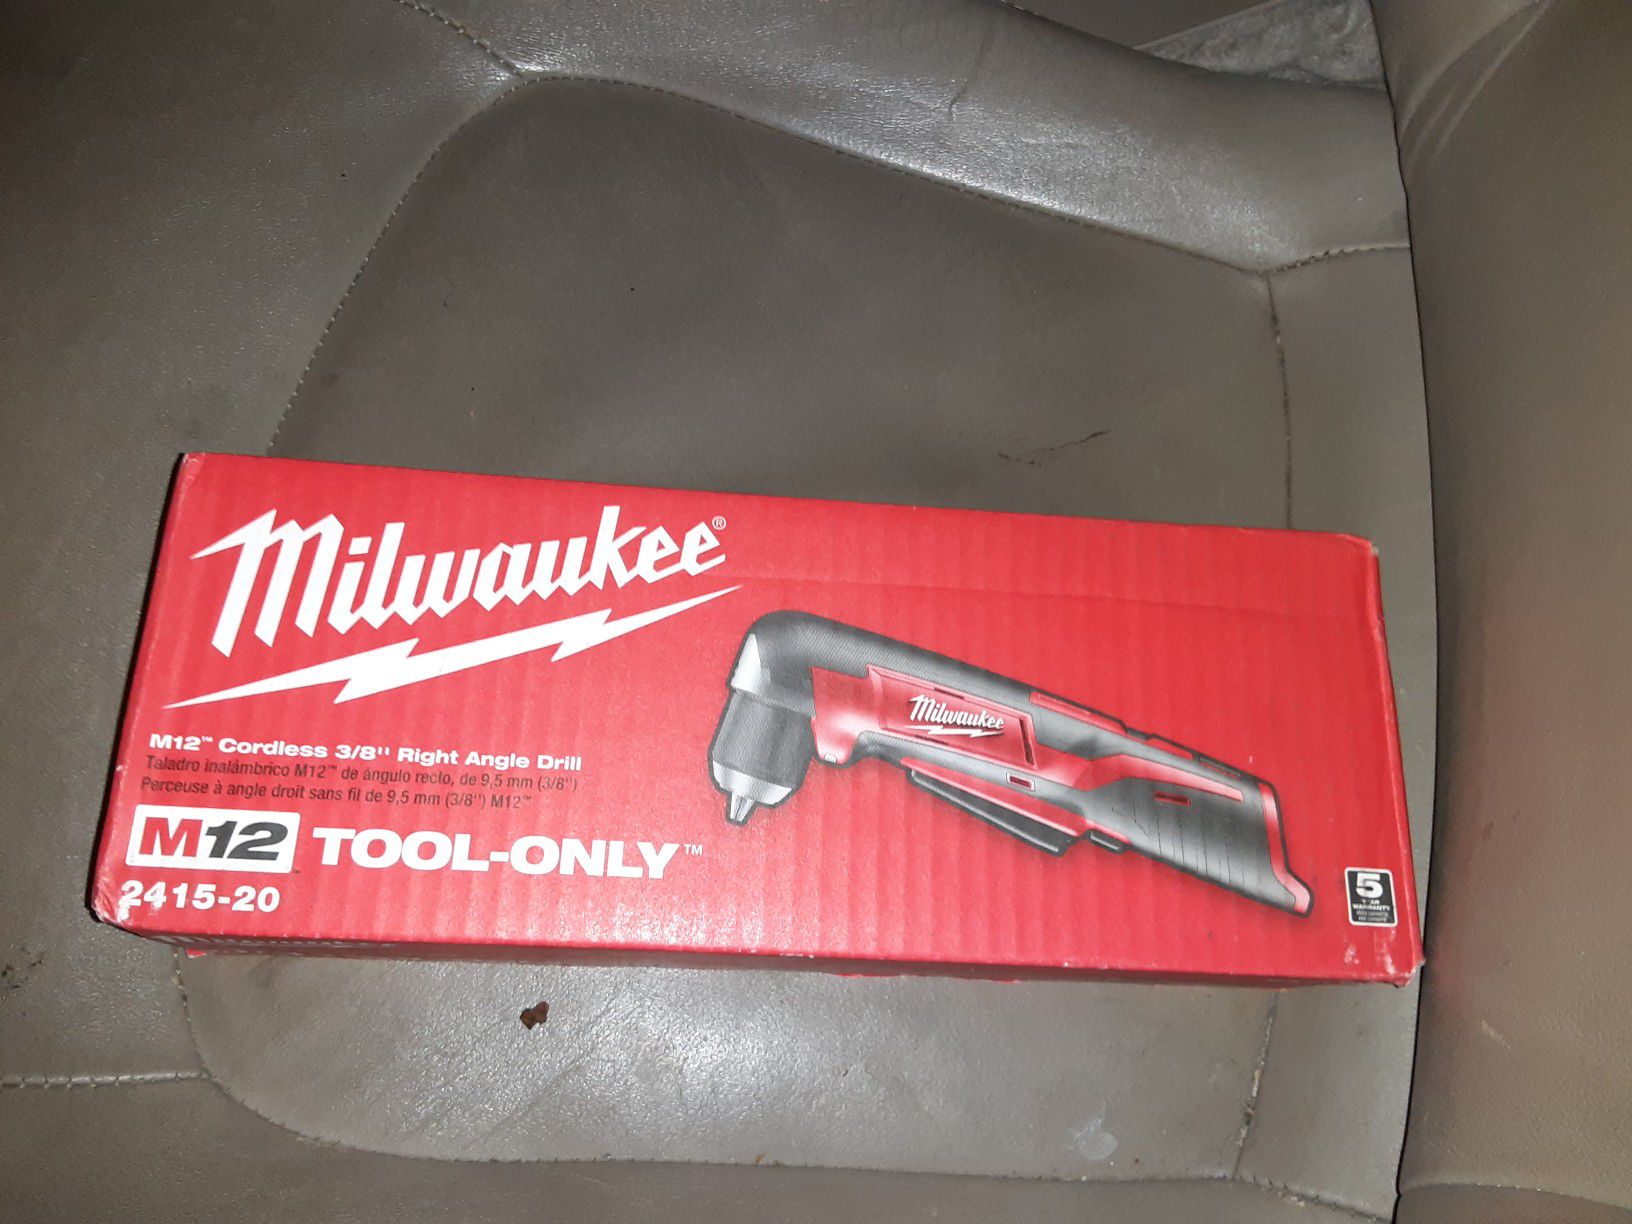 Milwaukee M12 3/8" right angle drill